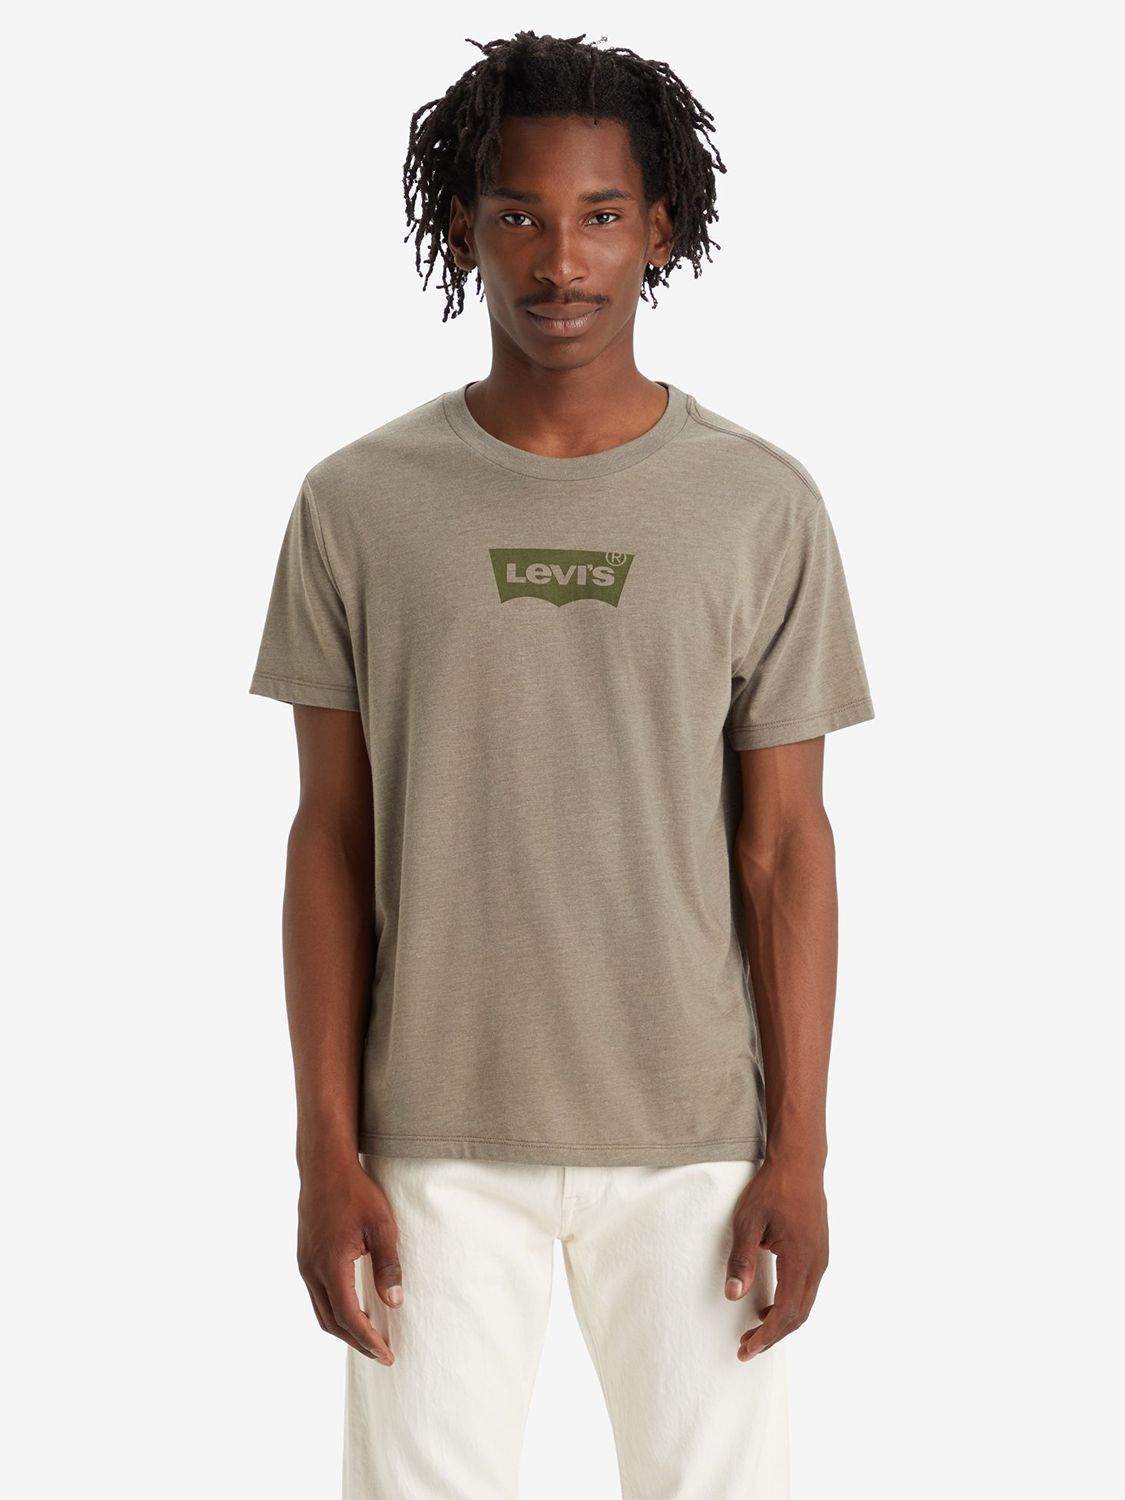 Levi's Graphic Crew Neck T-Shirt, Olive, XL